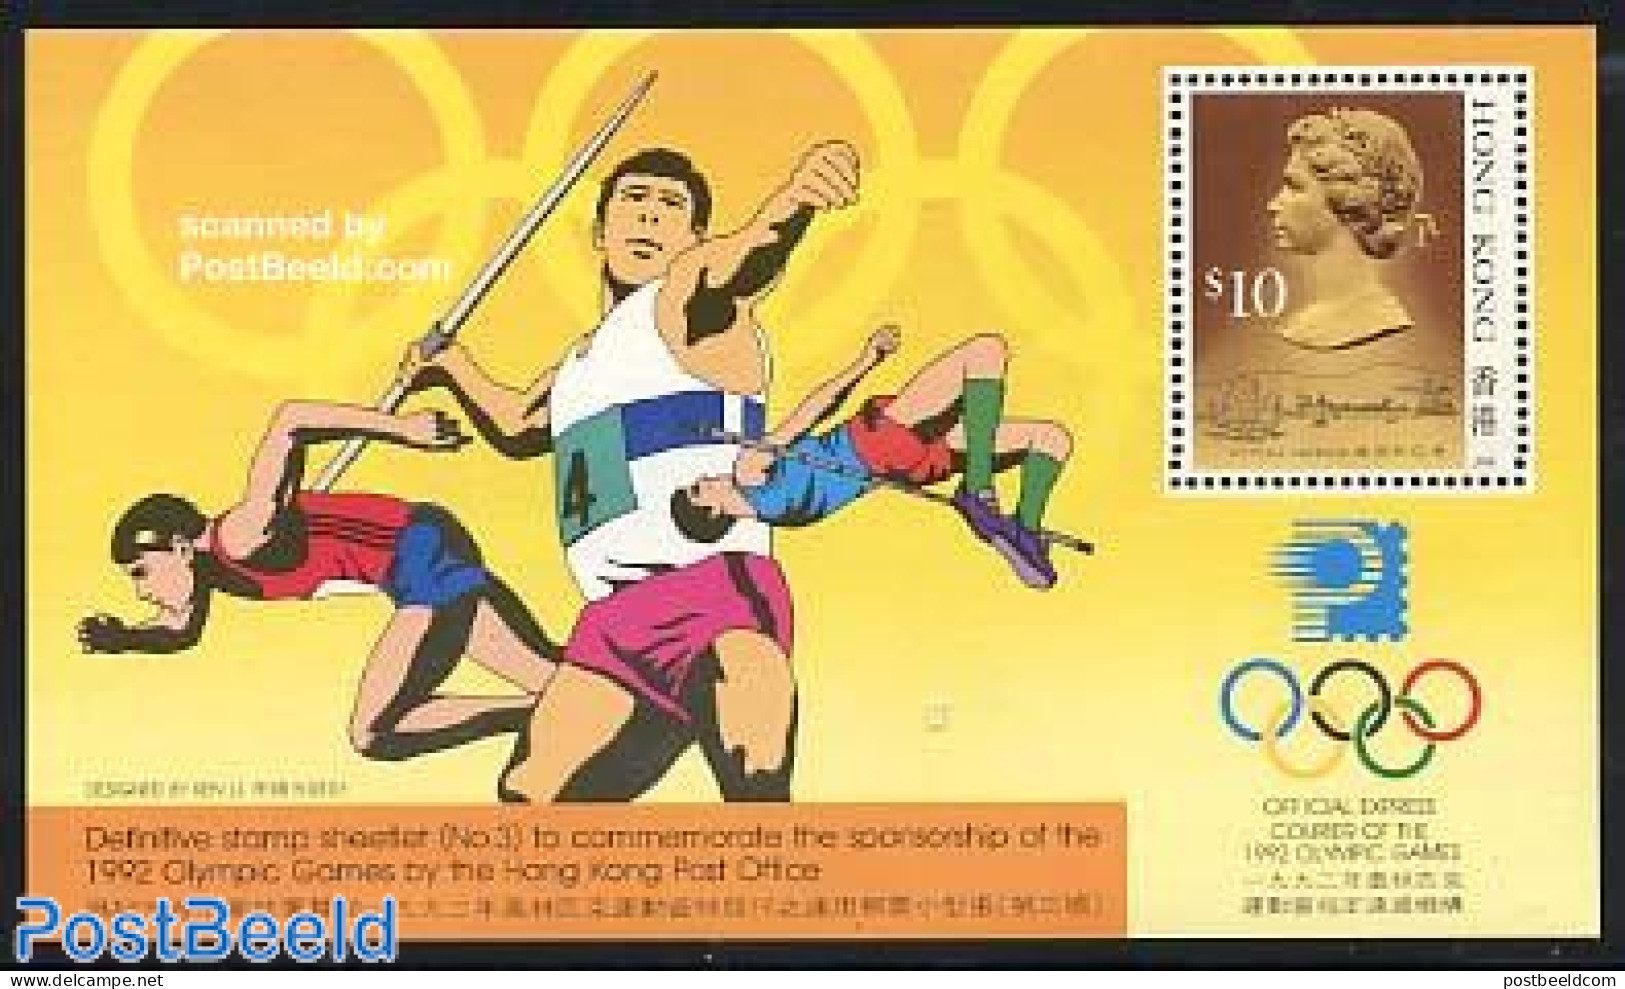 Hong Kong 1991 Olympic Games S/s, Mint NH, Sport - Olympic Games - Olympic Winter Games - Nuovi